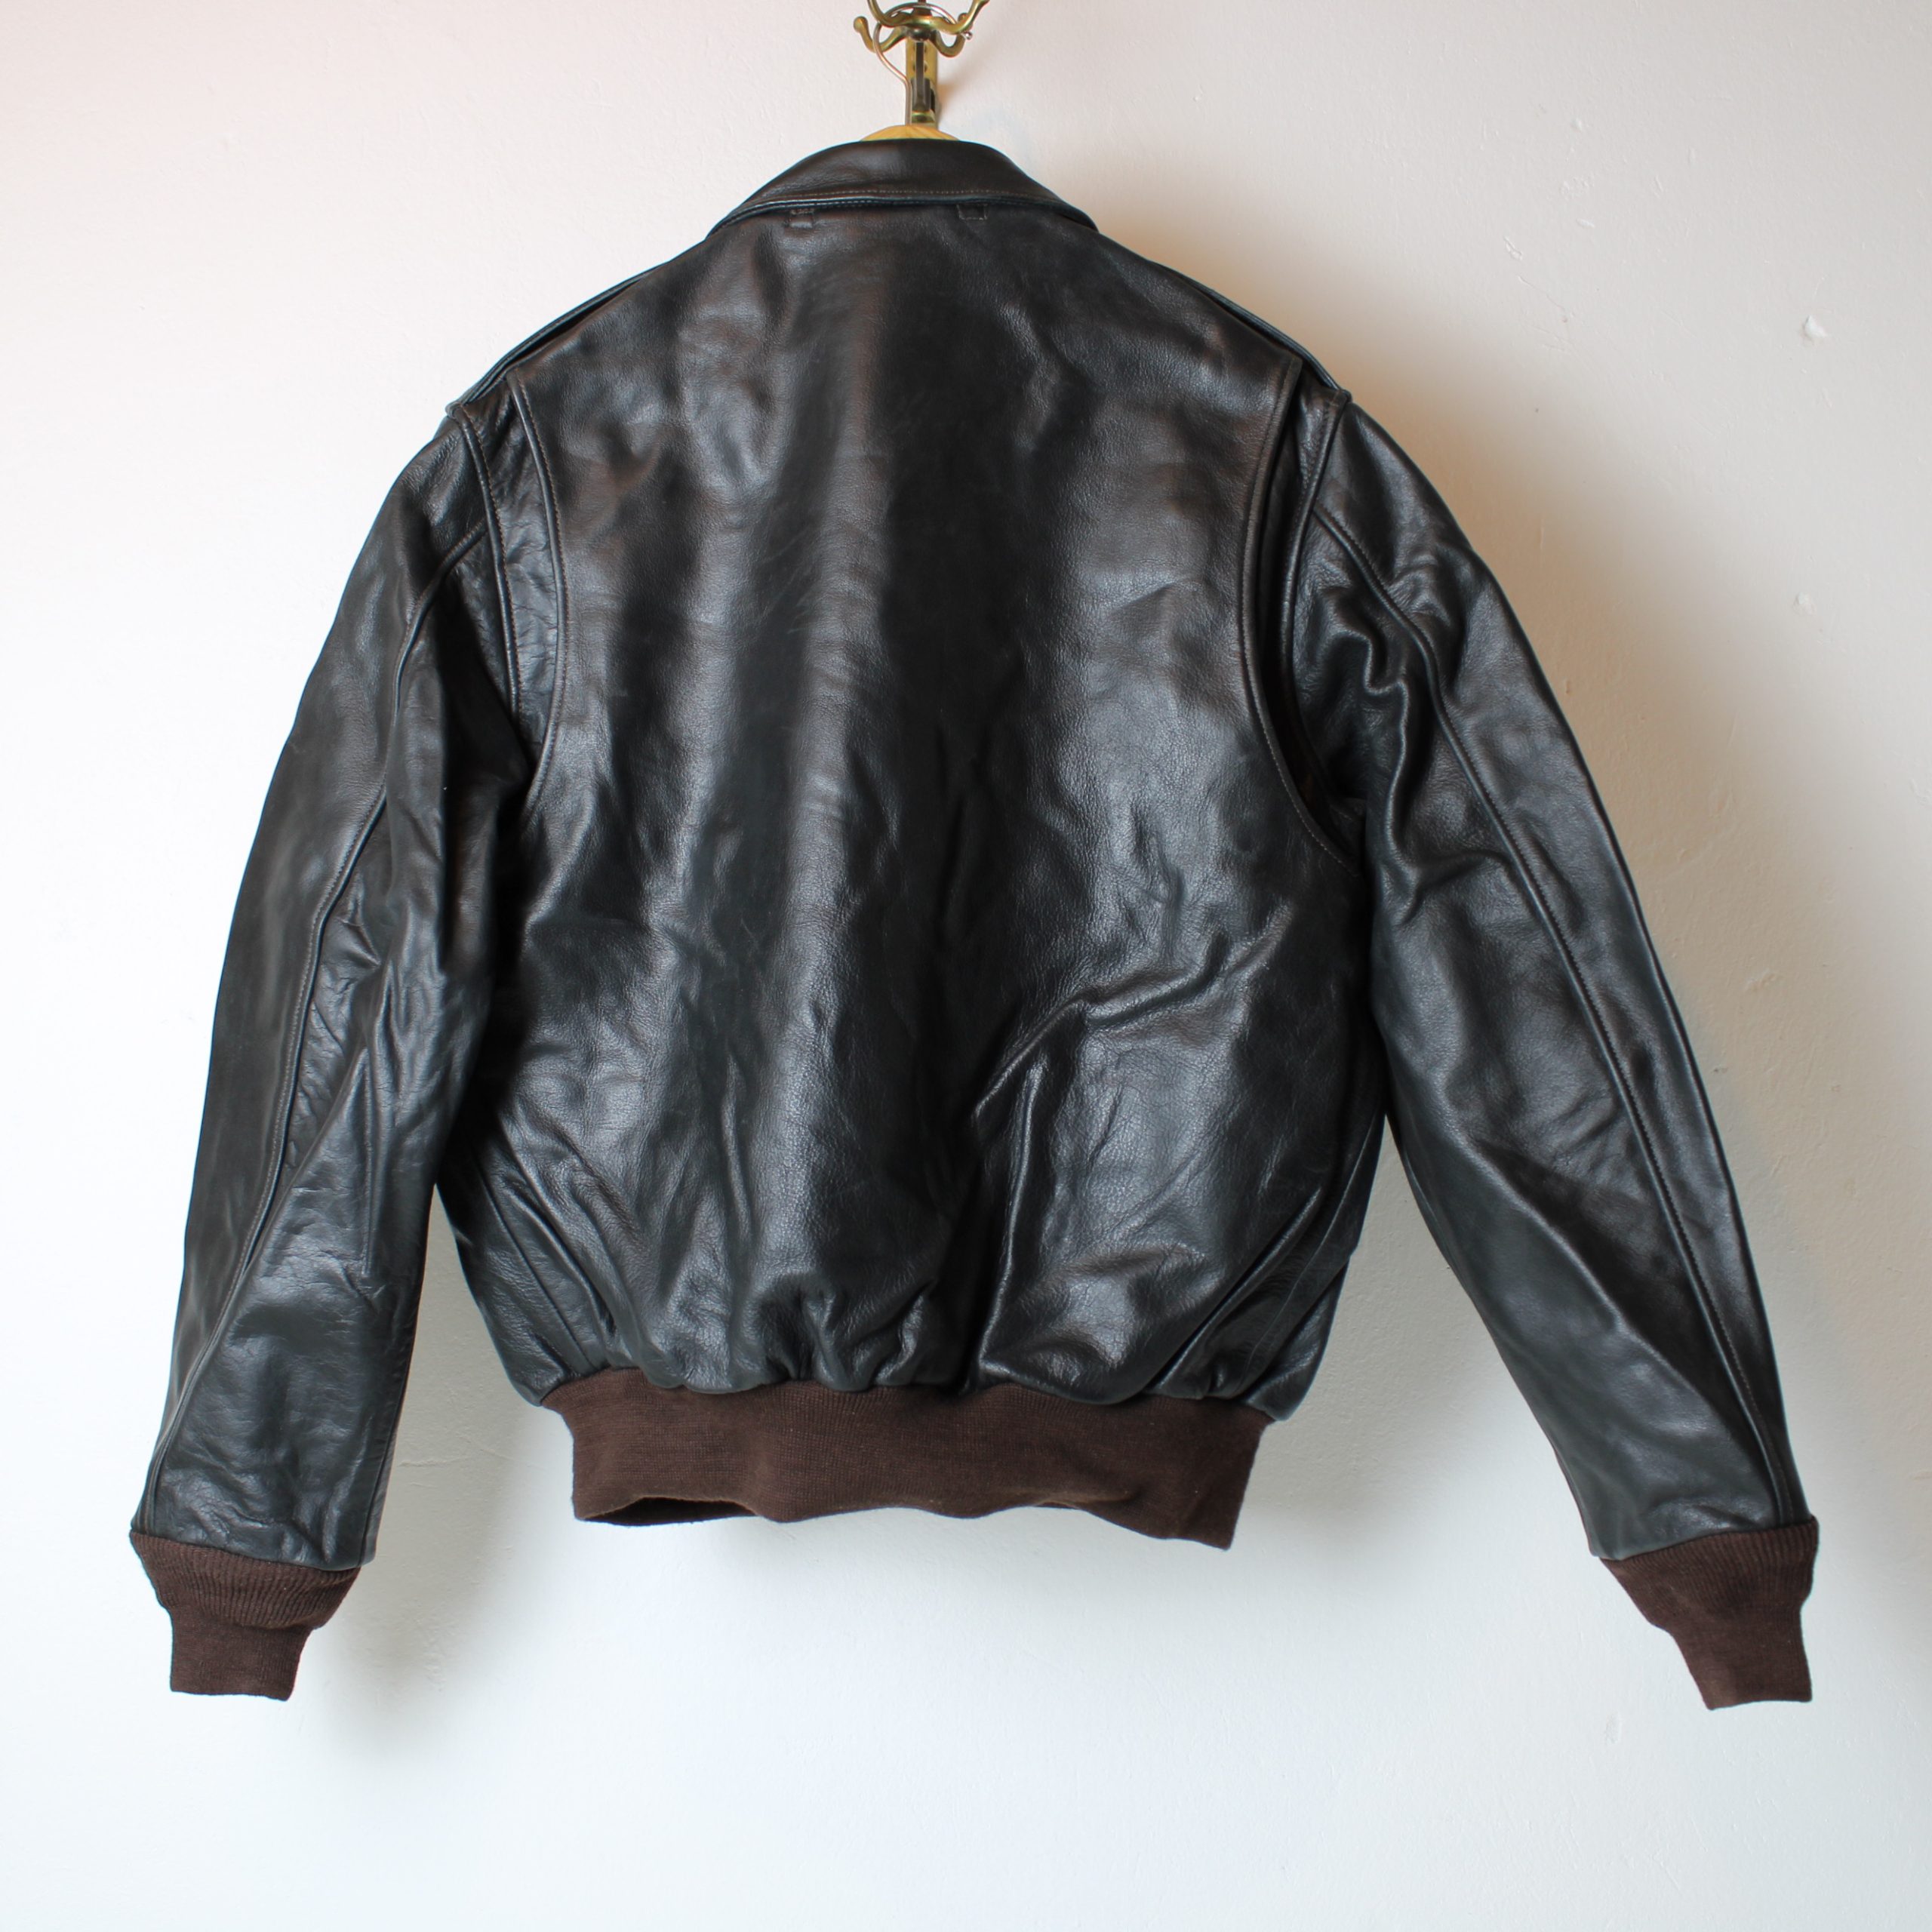 A2-A Jacket (Sample jacket) - Size 44 - AVI LEATHER